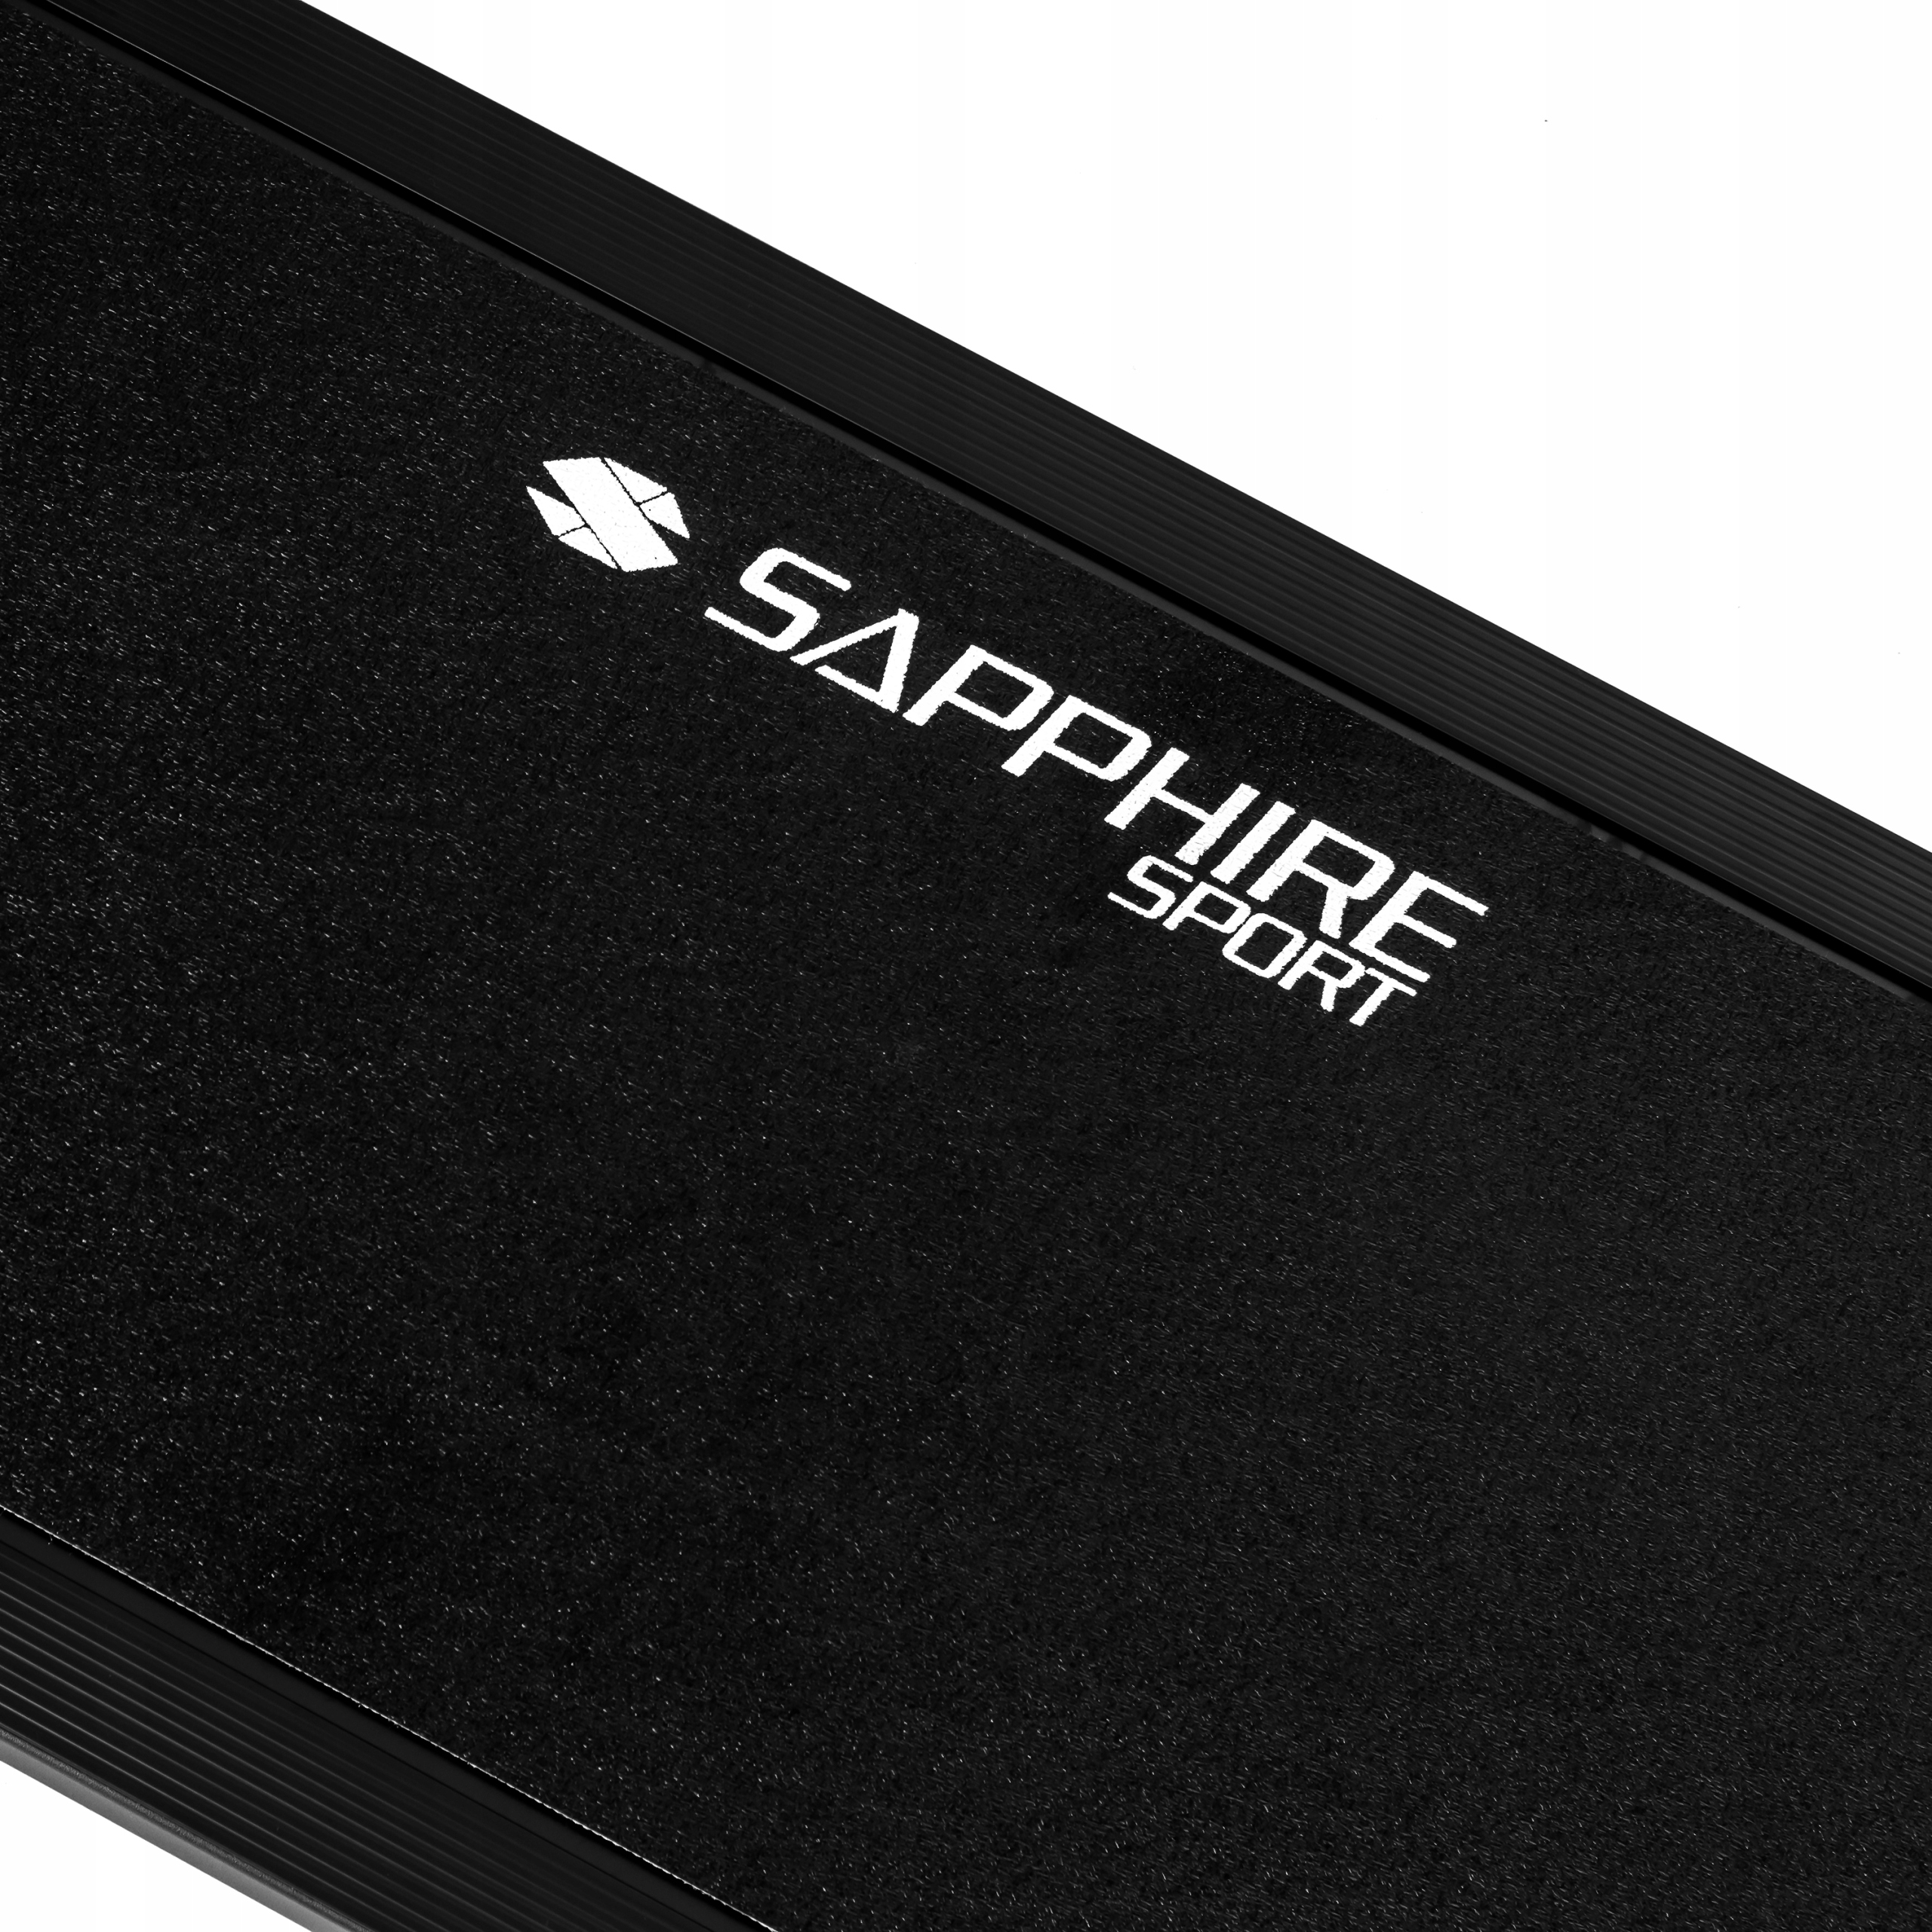 Bieżnia elektryczna Sapphire SG-5.1 Vivo FitSHOW